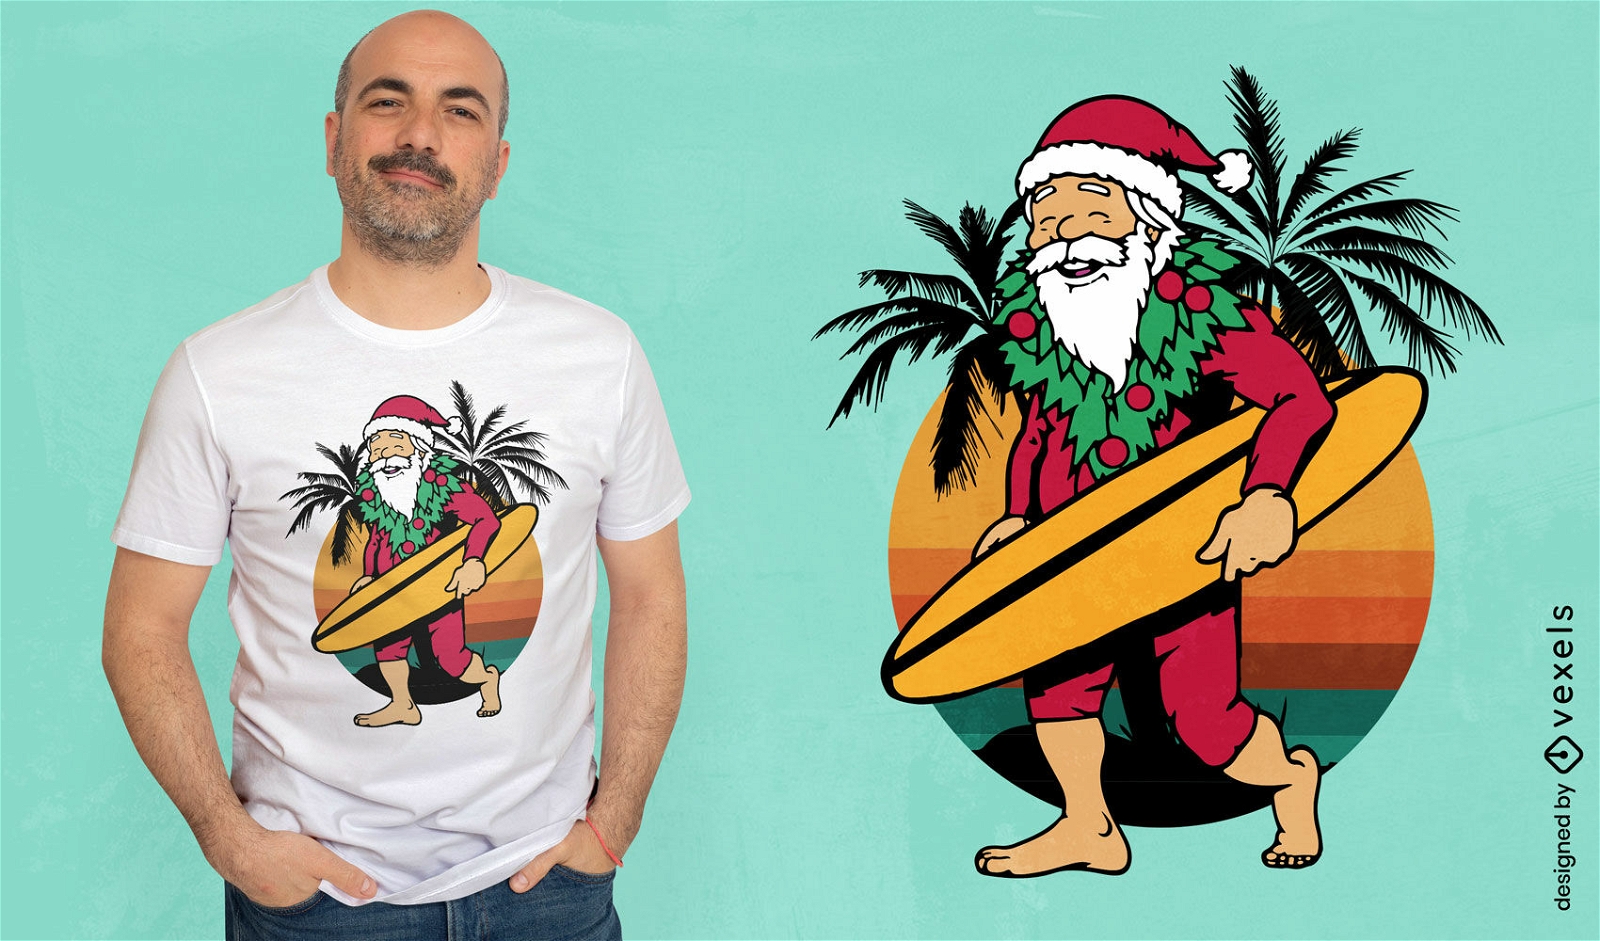 Santa Claus surfboard t-shirt design